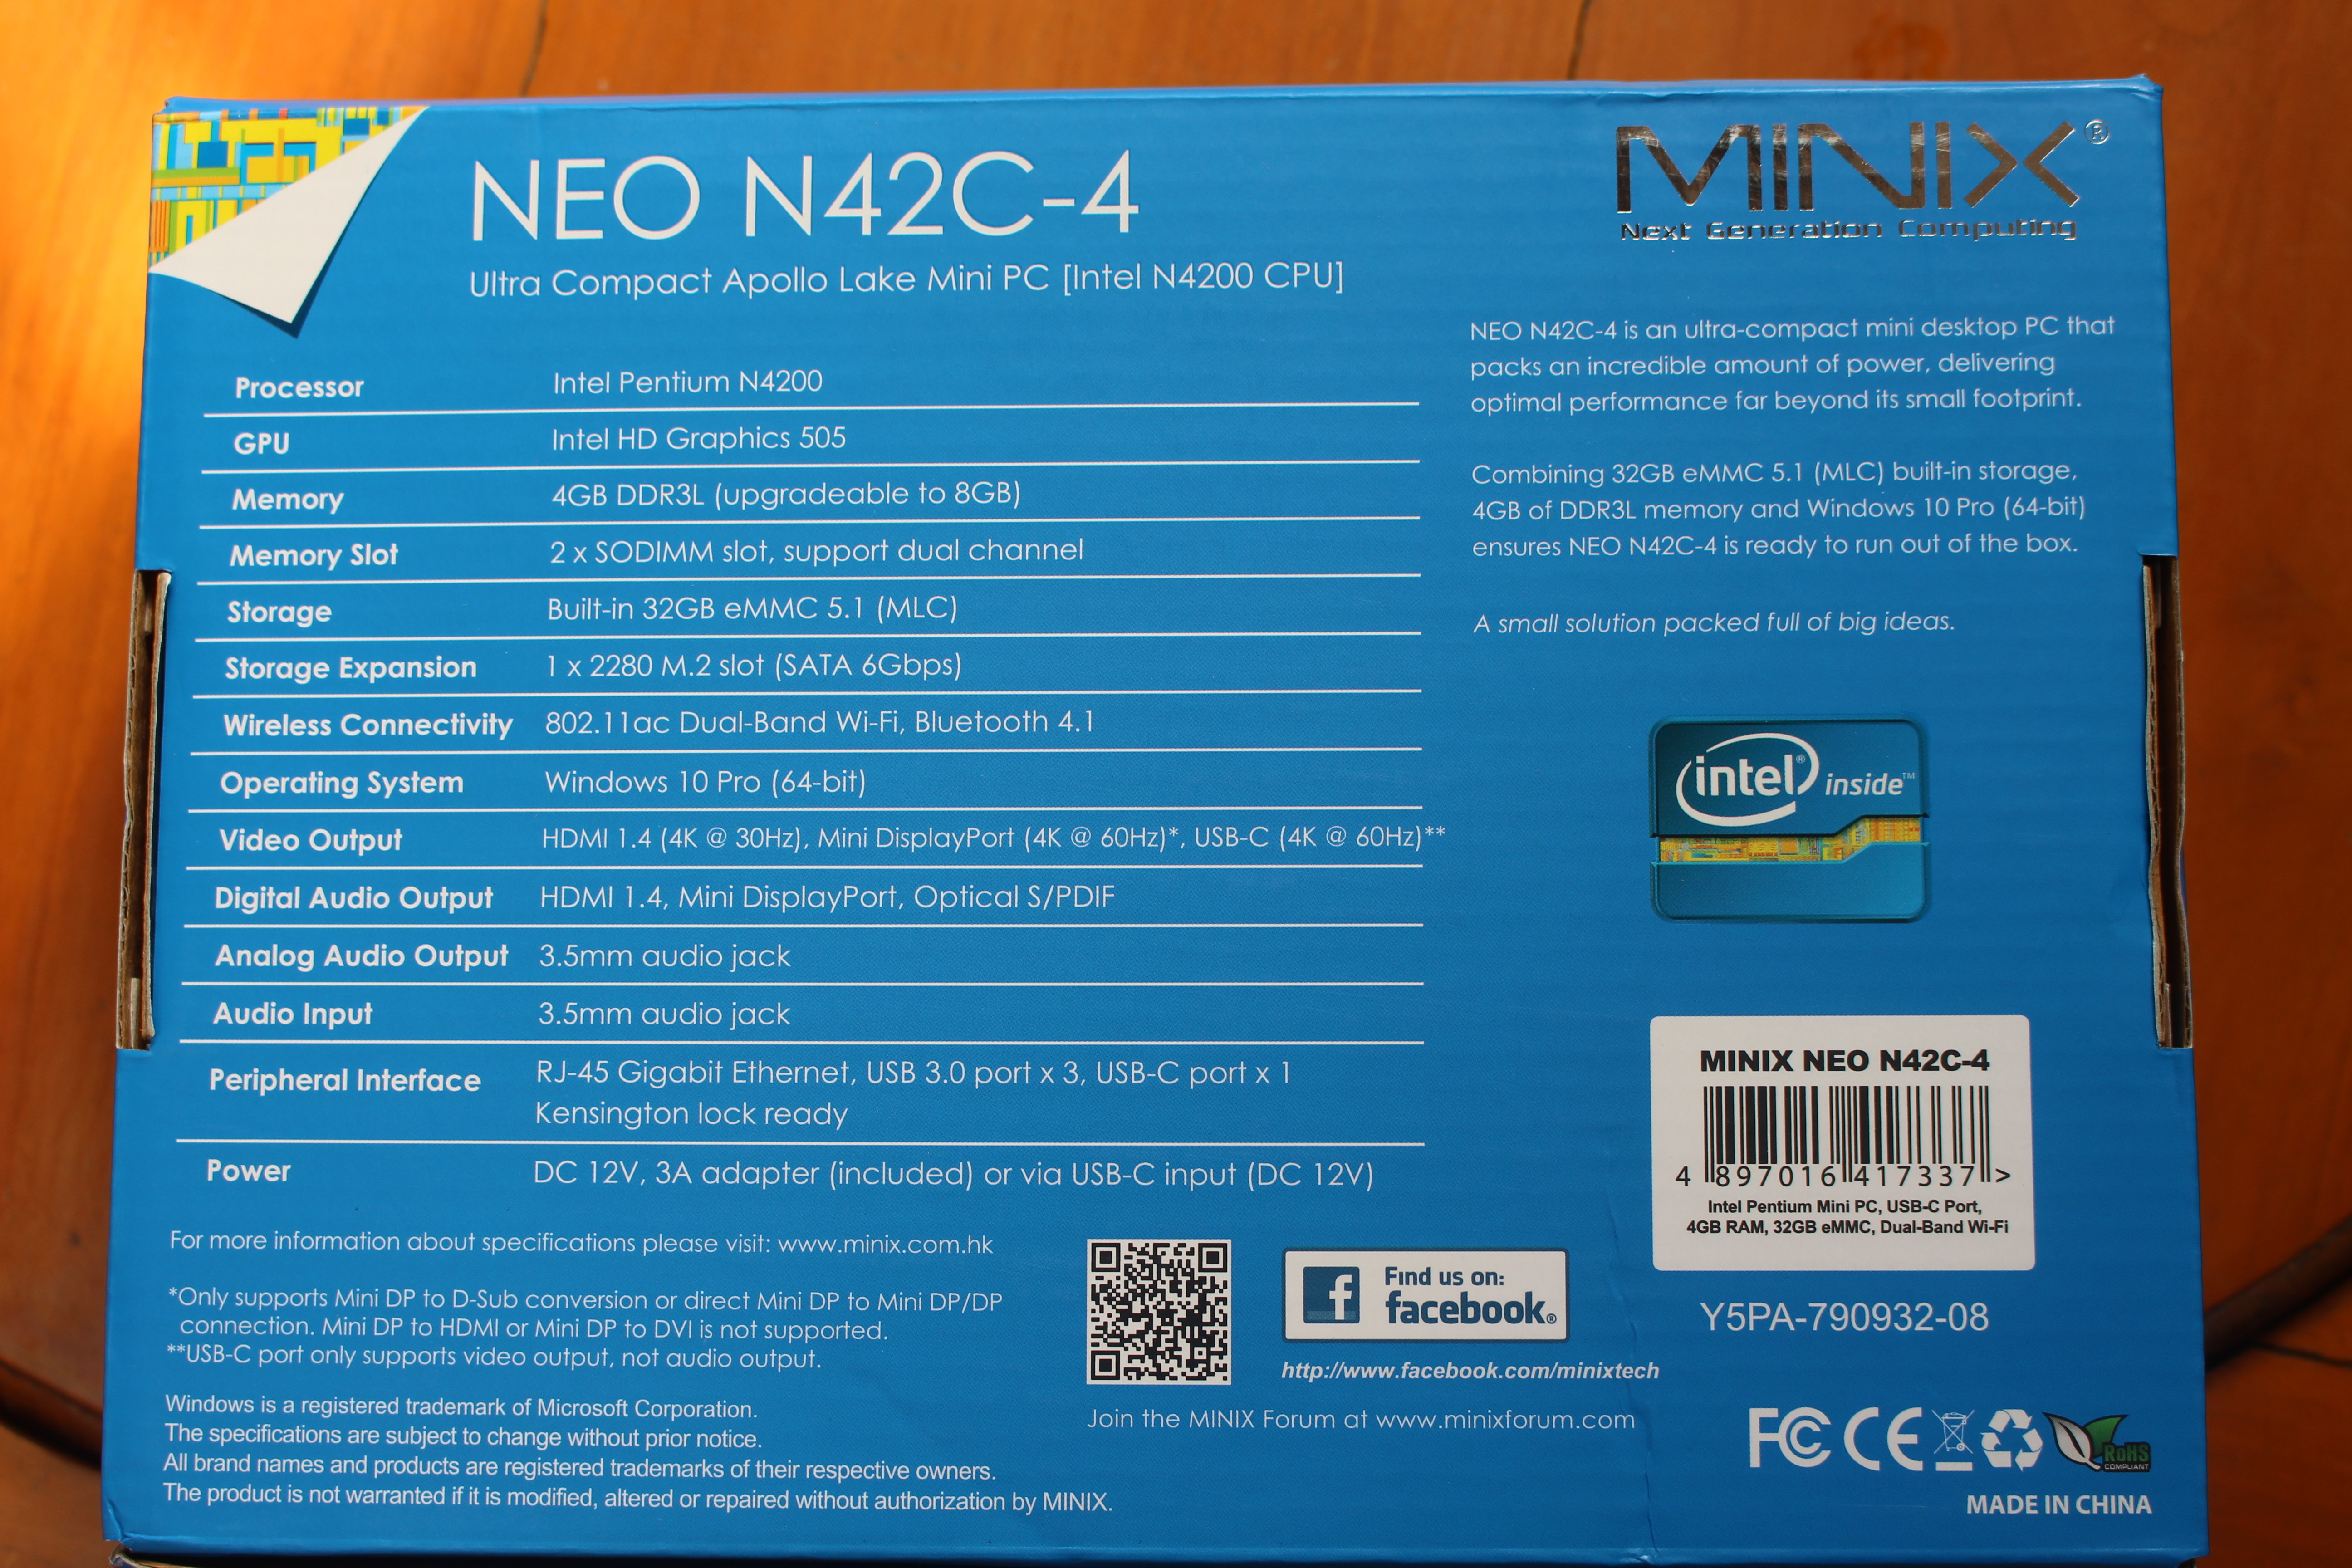 MINIX Neo N42C-4 - Windows 10 Pro Mini PC Review and Upgrade Guide